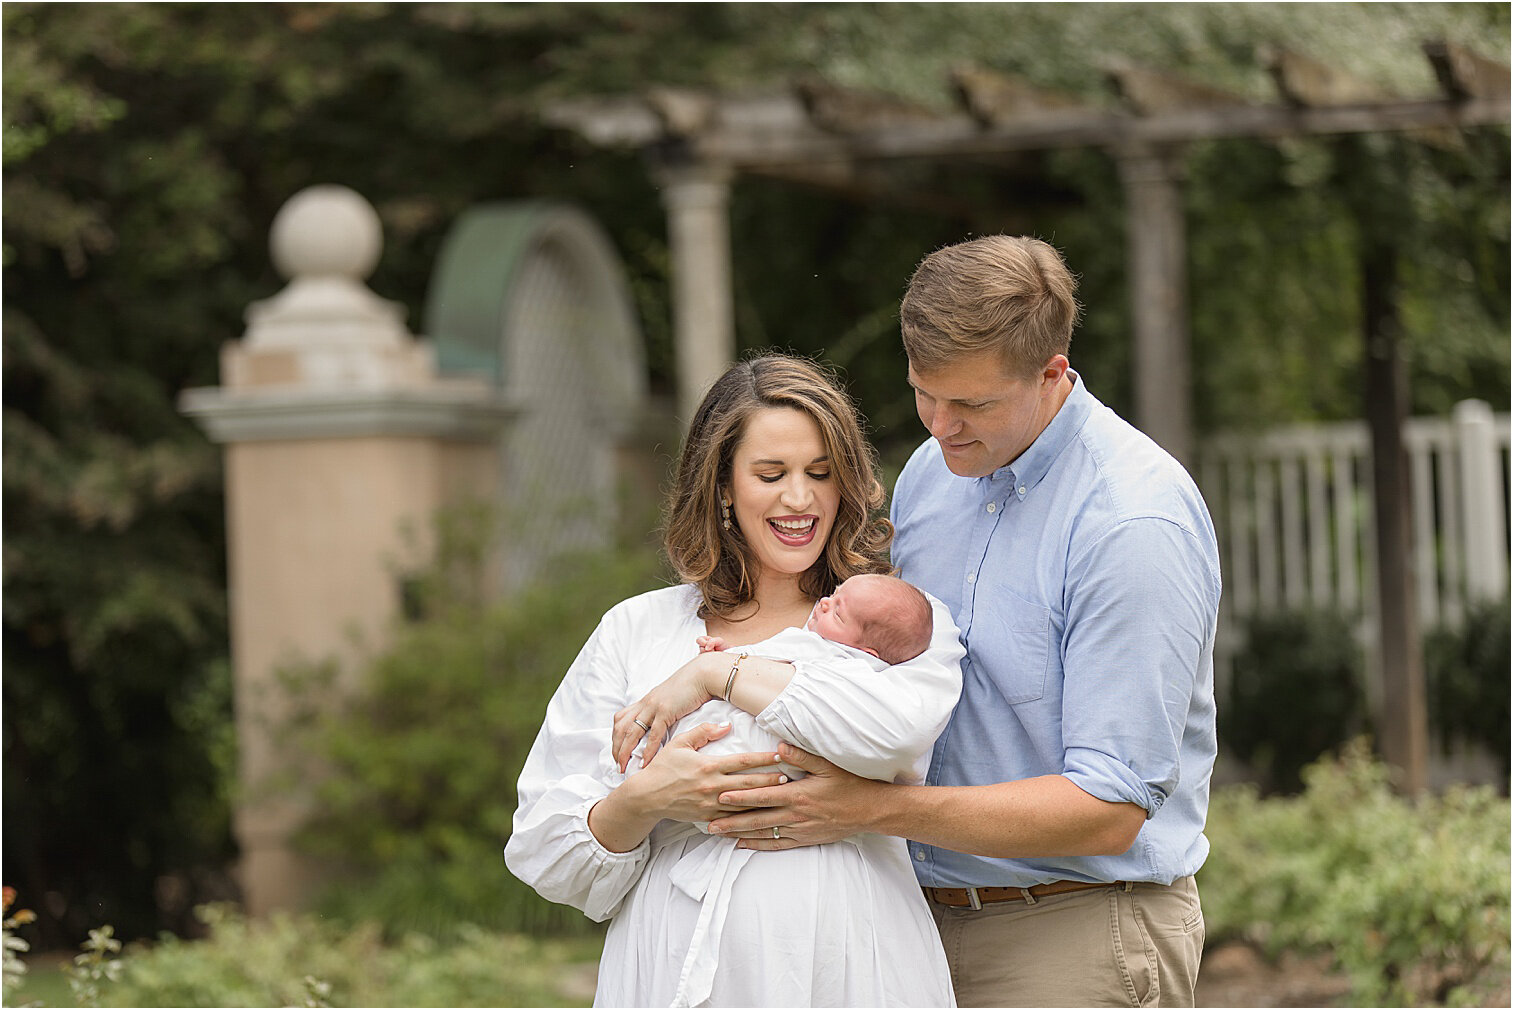 Baby John & Parent Posing | Newborn Family Photography